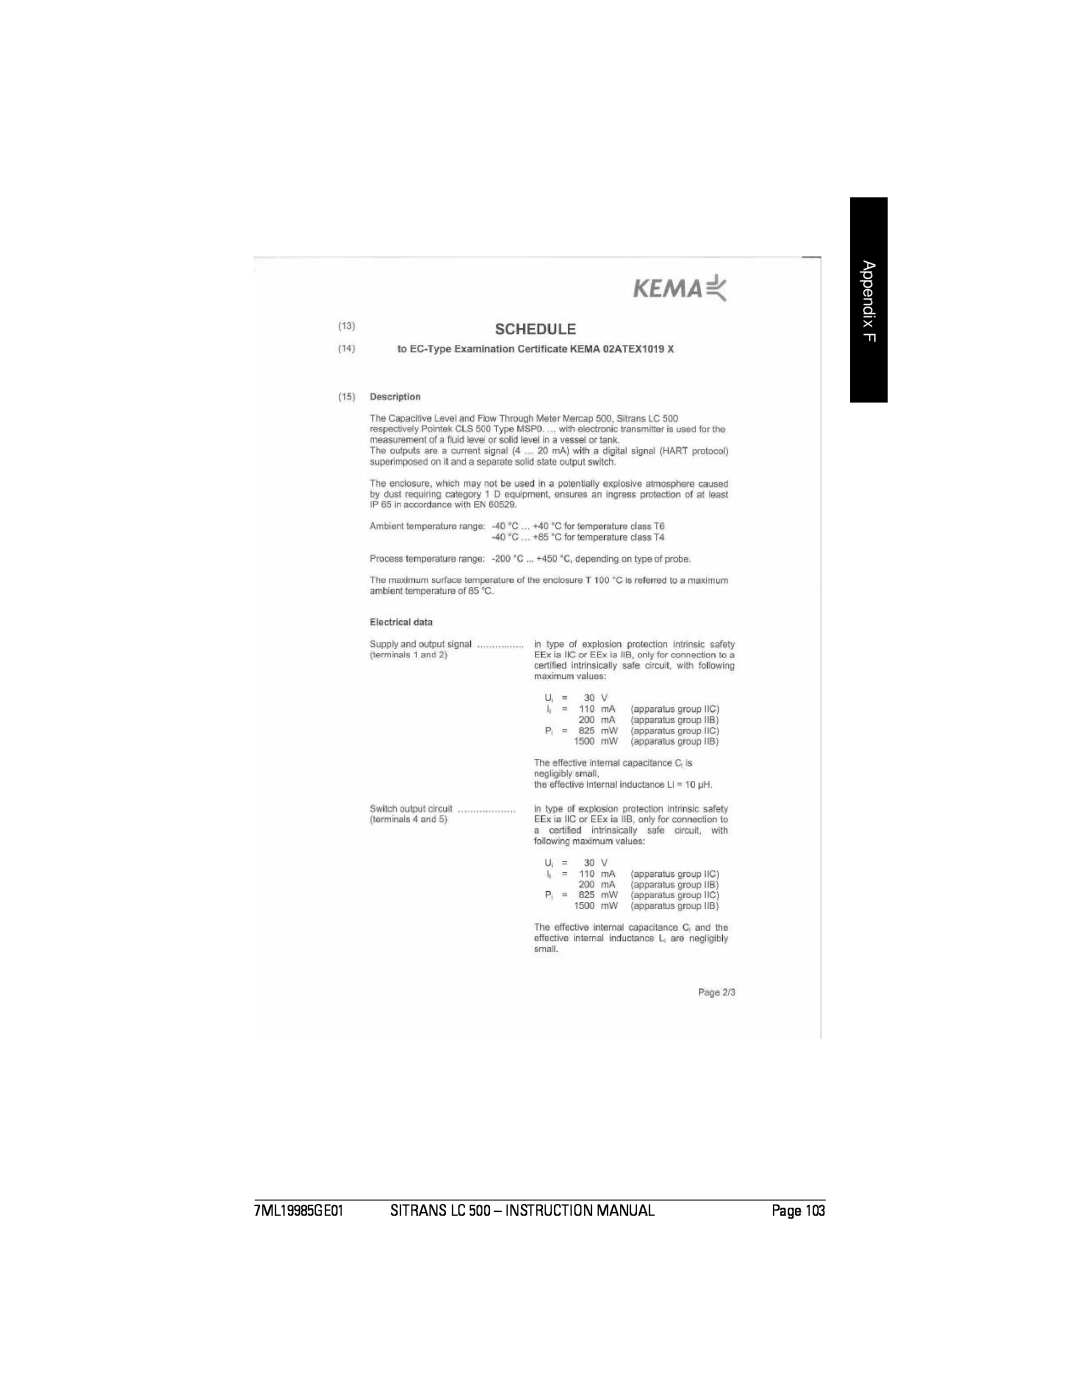 Siemens Sitrans instruction manual Appendix F, 7ML19985GE01, SITRANS LC 500 - INSTRUCTION MANUAL, Page 